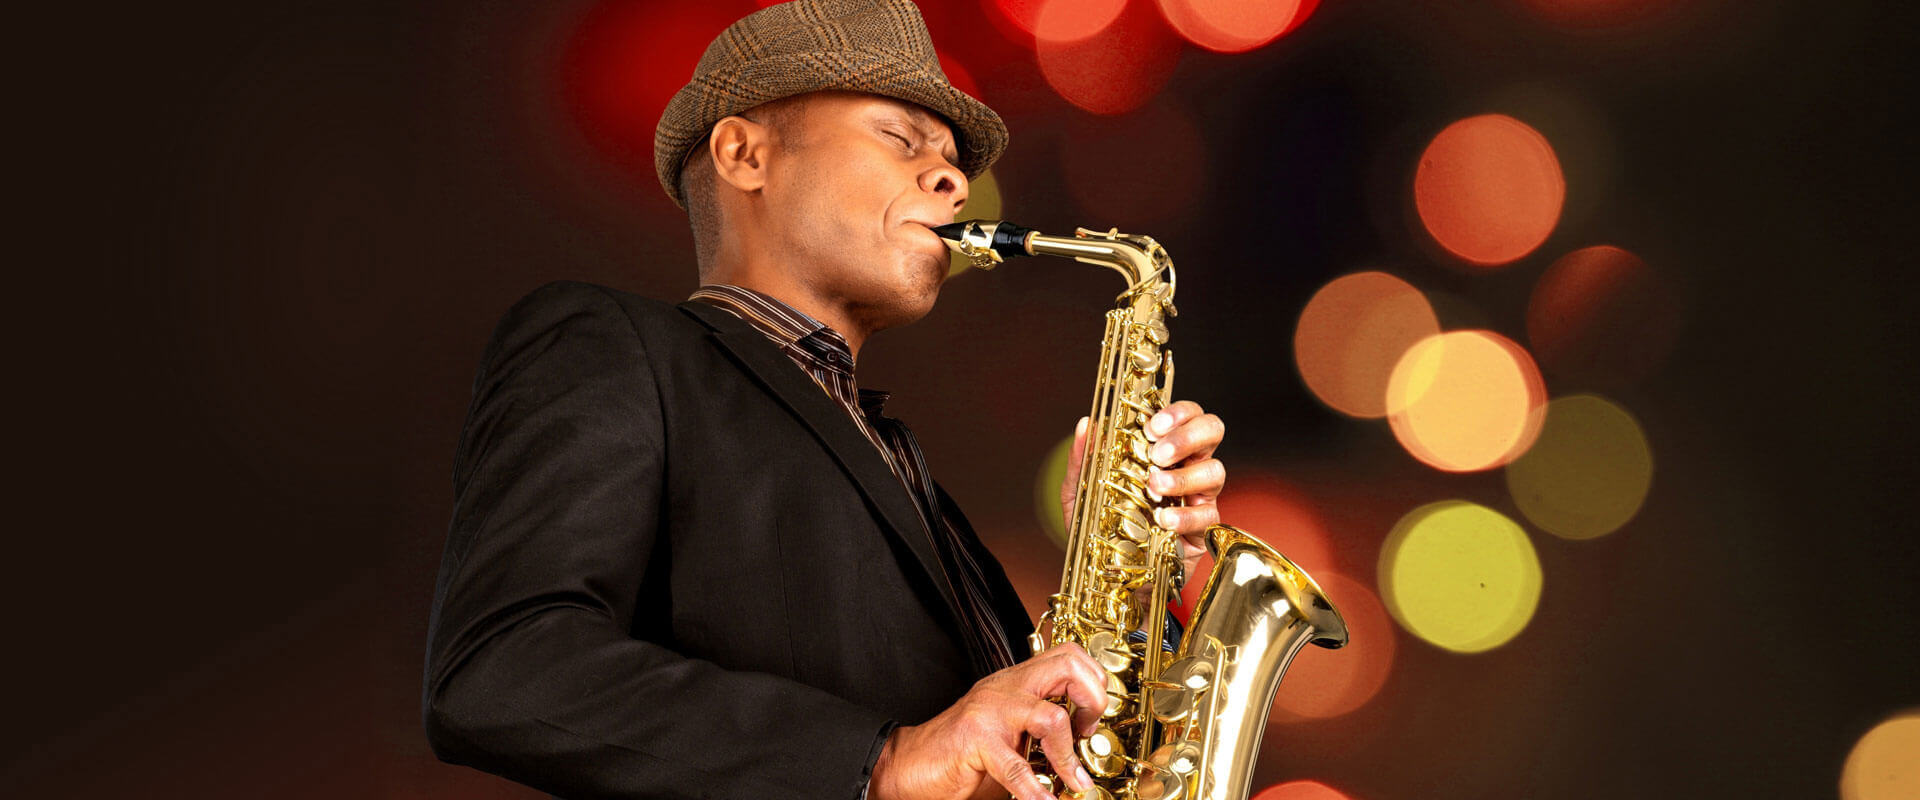 Saxophone Lessons Newark, NY